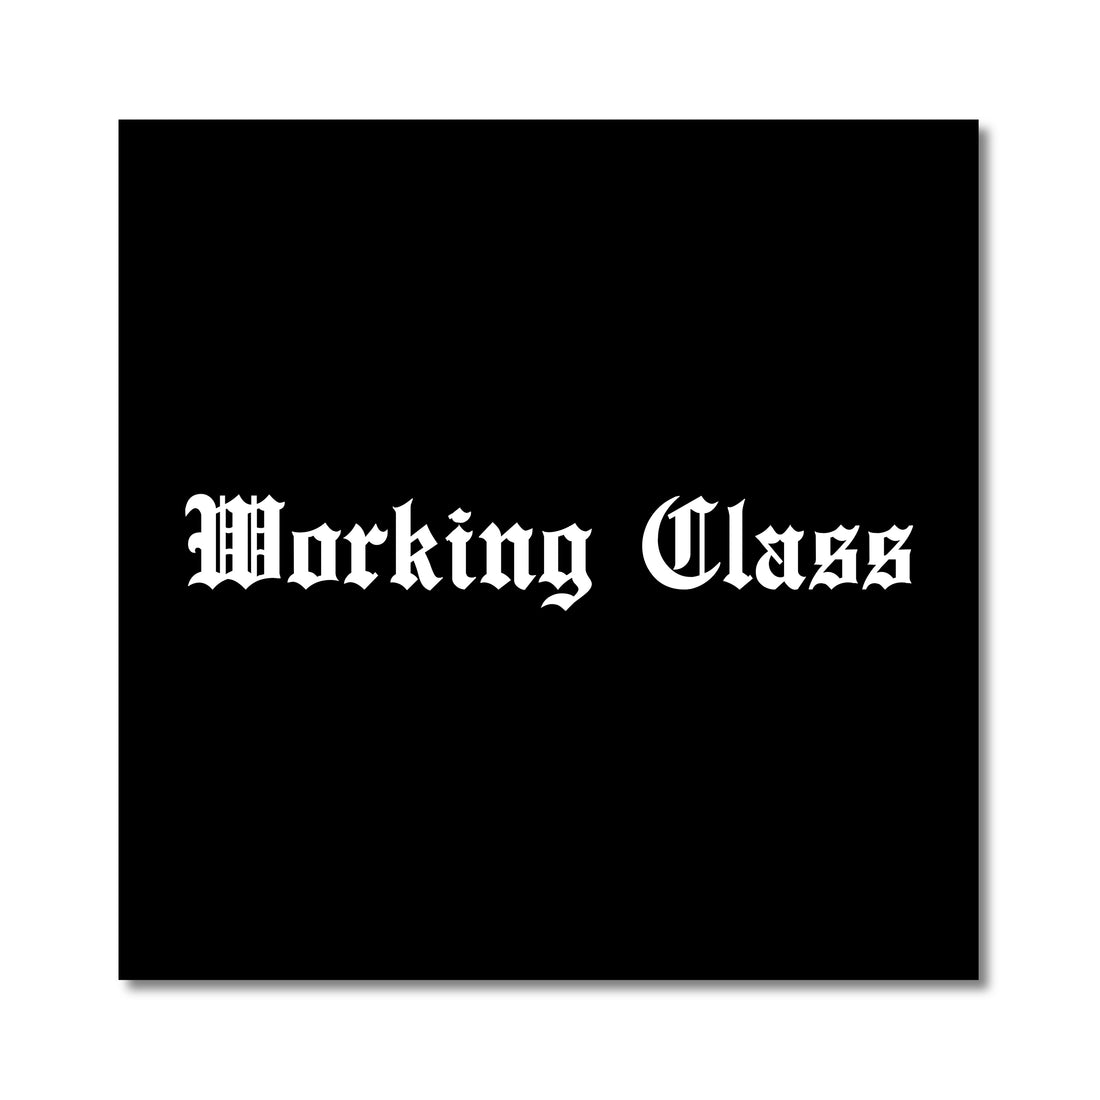 Working Class | Jumper | Black